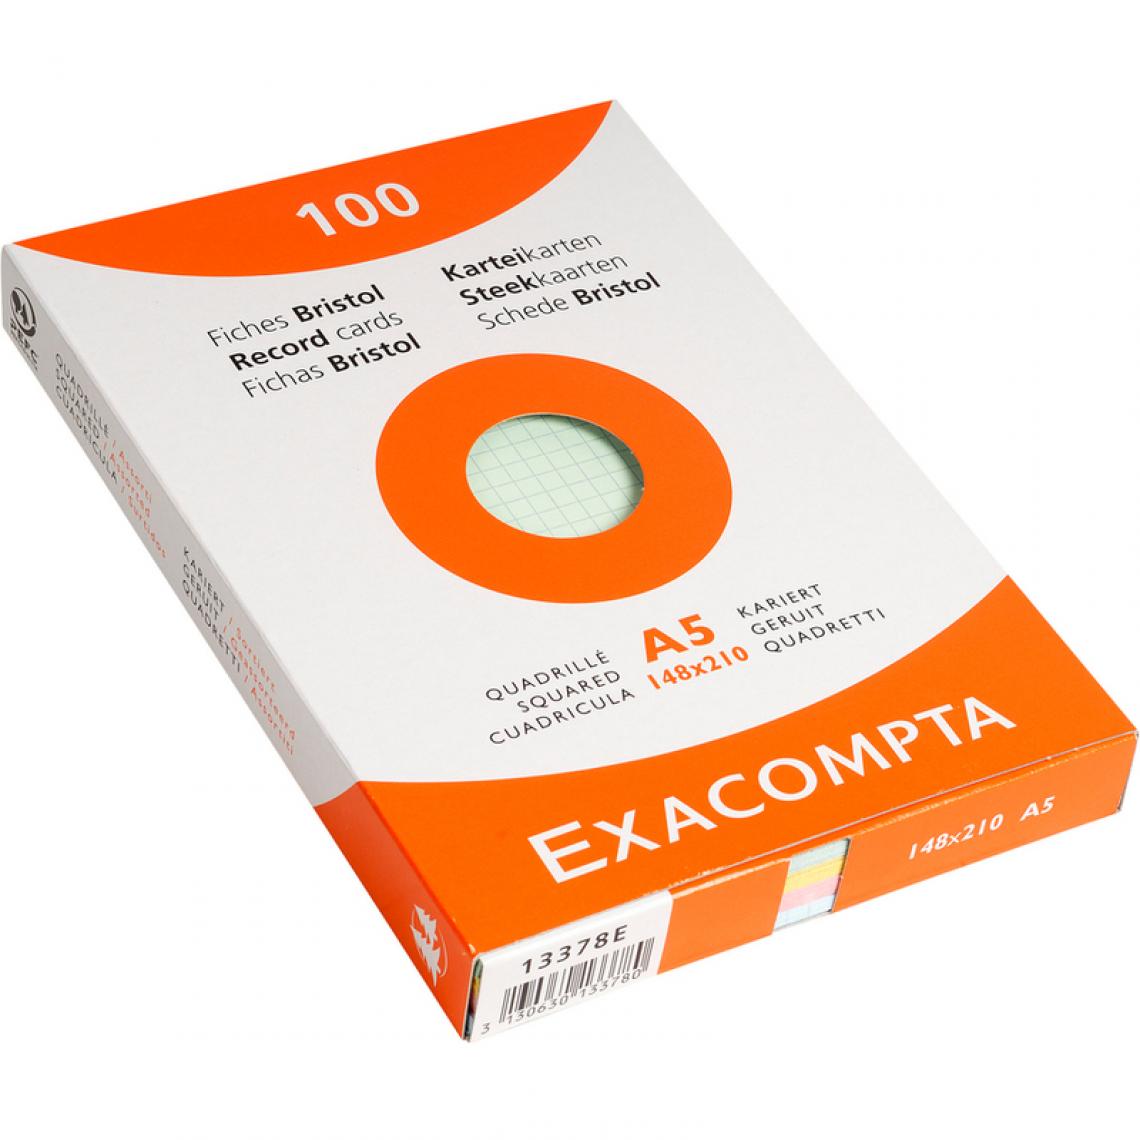 Exacompta - EXACOMPTA Fiches bristol, A5, quadrillé, assorti () - Accessoires Bureau